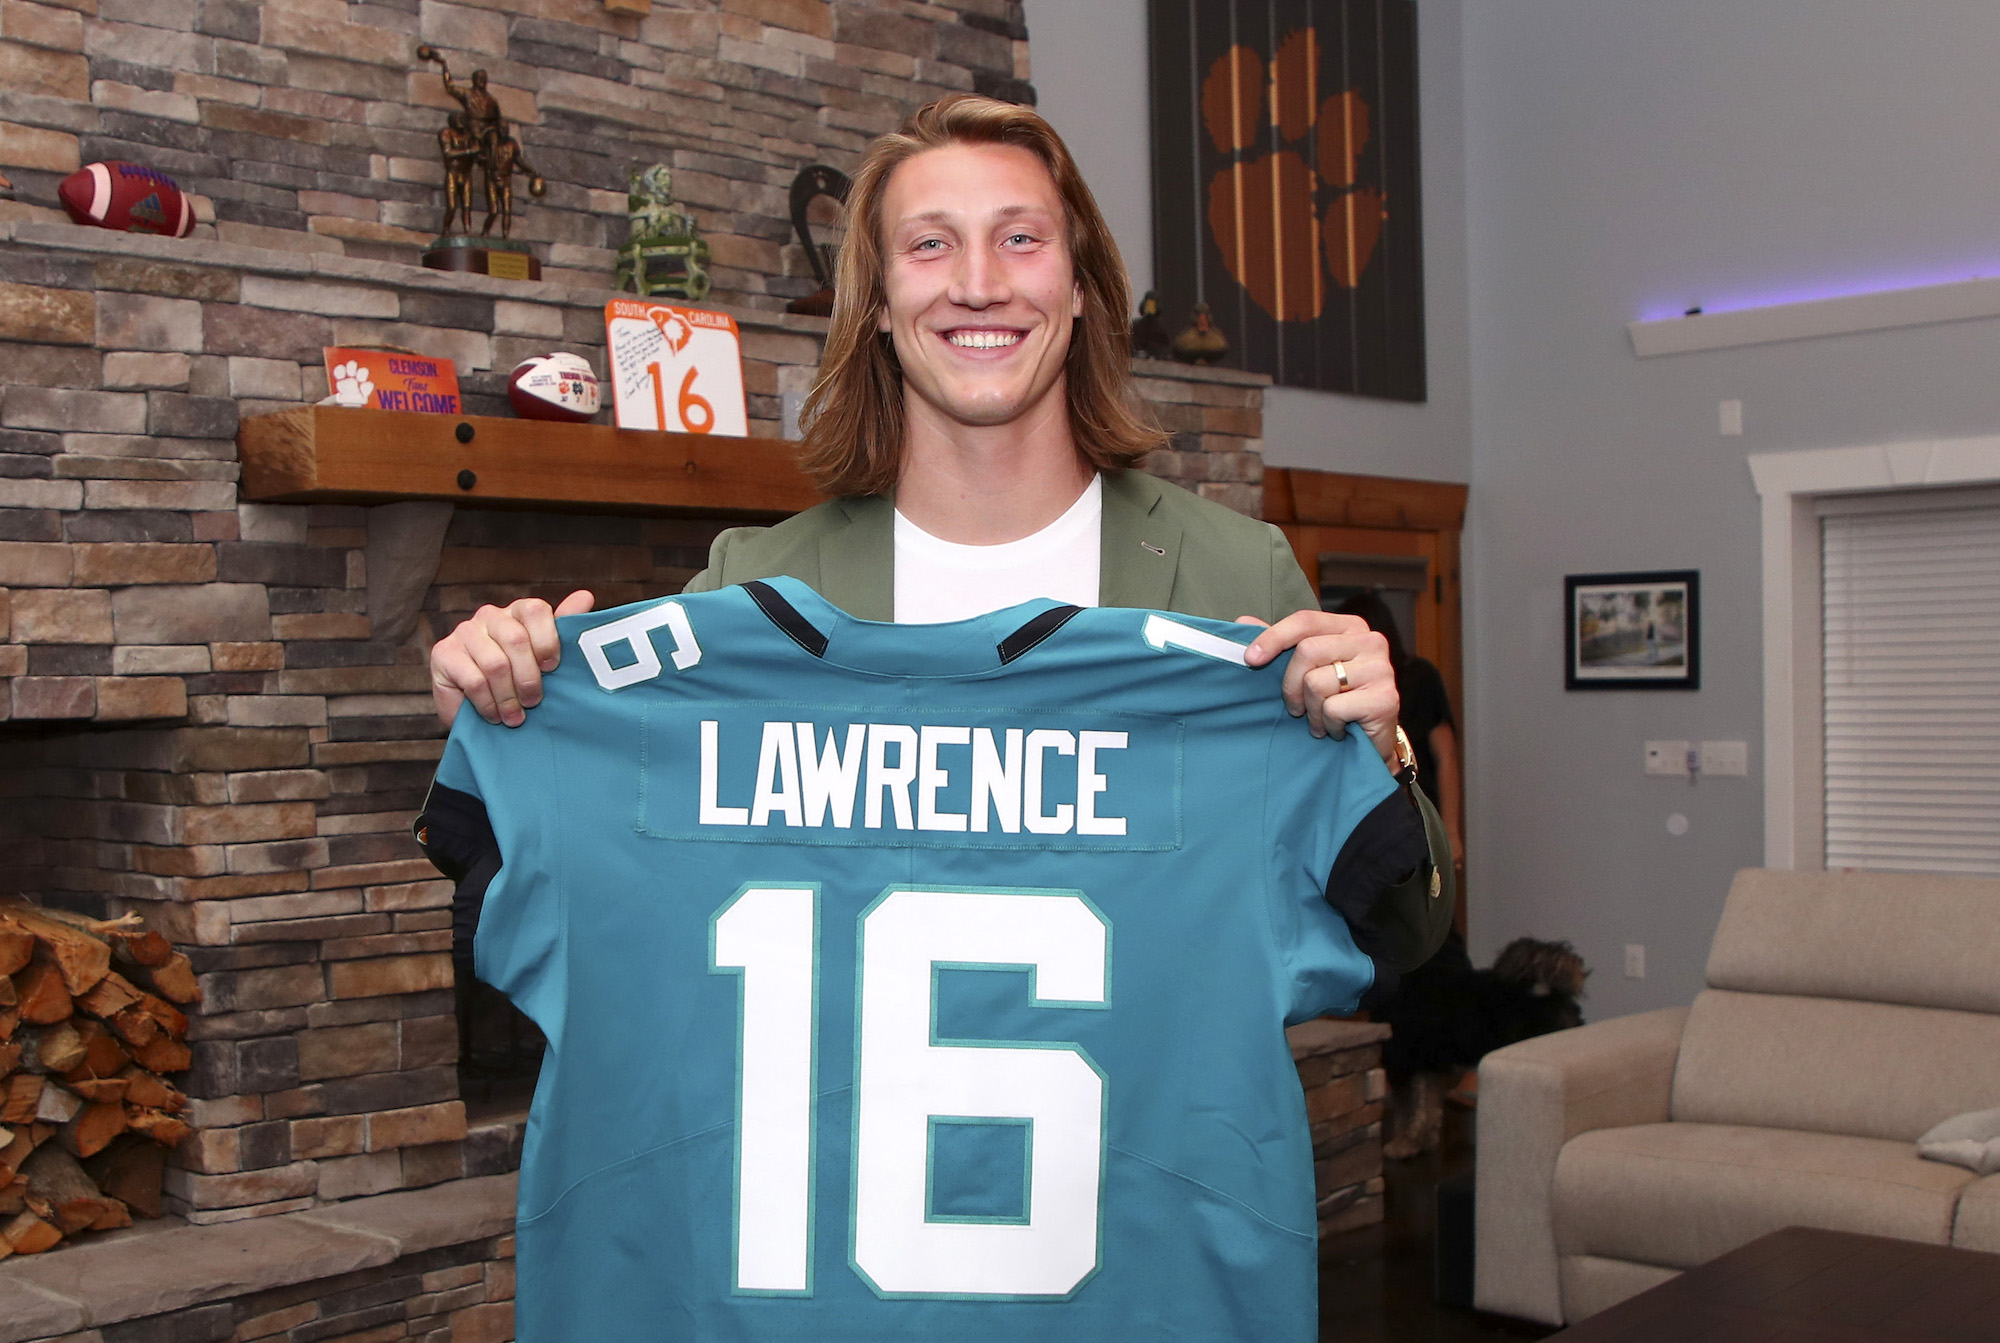 Clemson quarterback Trevor Lawrence is selected to the Jacksonville Jaguars during the 2021 NFL Draft on Thursday, April 29, 2021 in Seneca, South Carolina. (Logan Bowles/NFL)